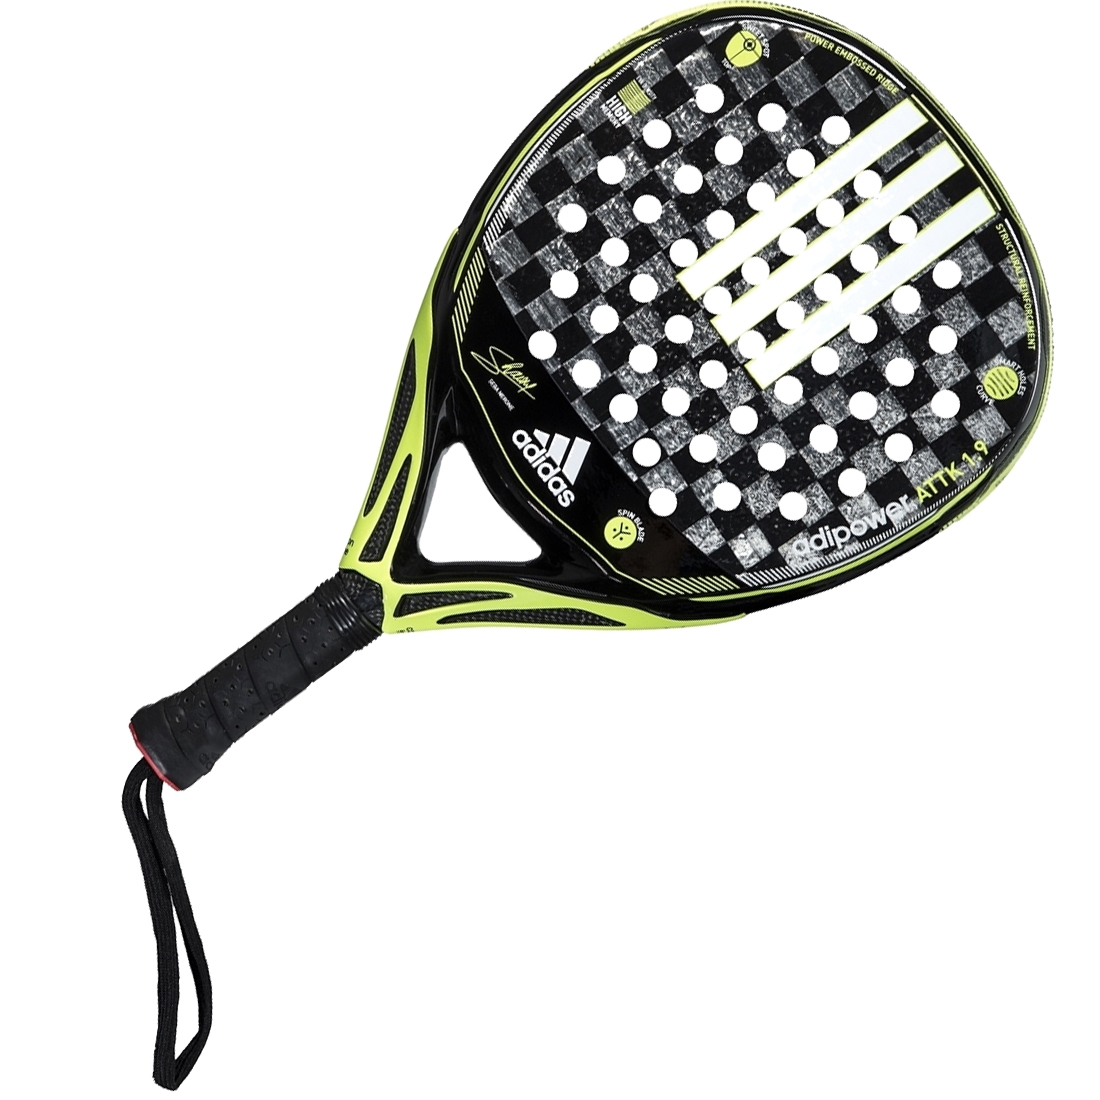 Adidas ATTK 1.9 racket